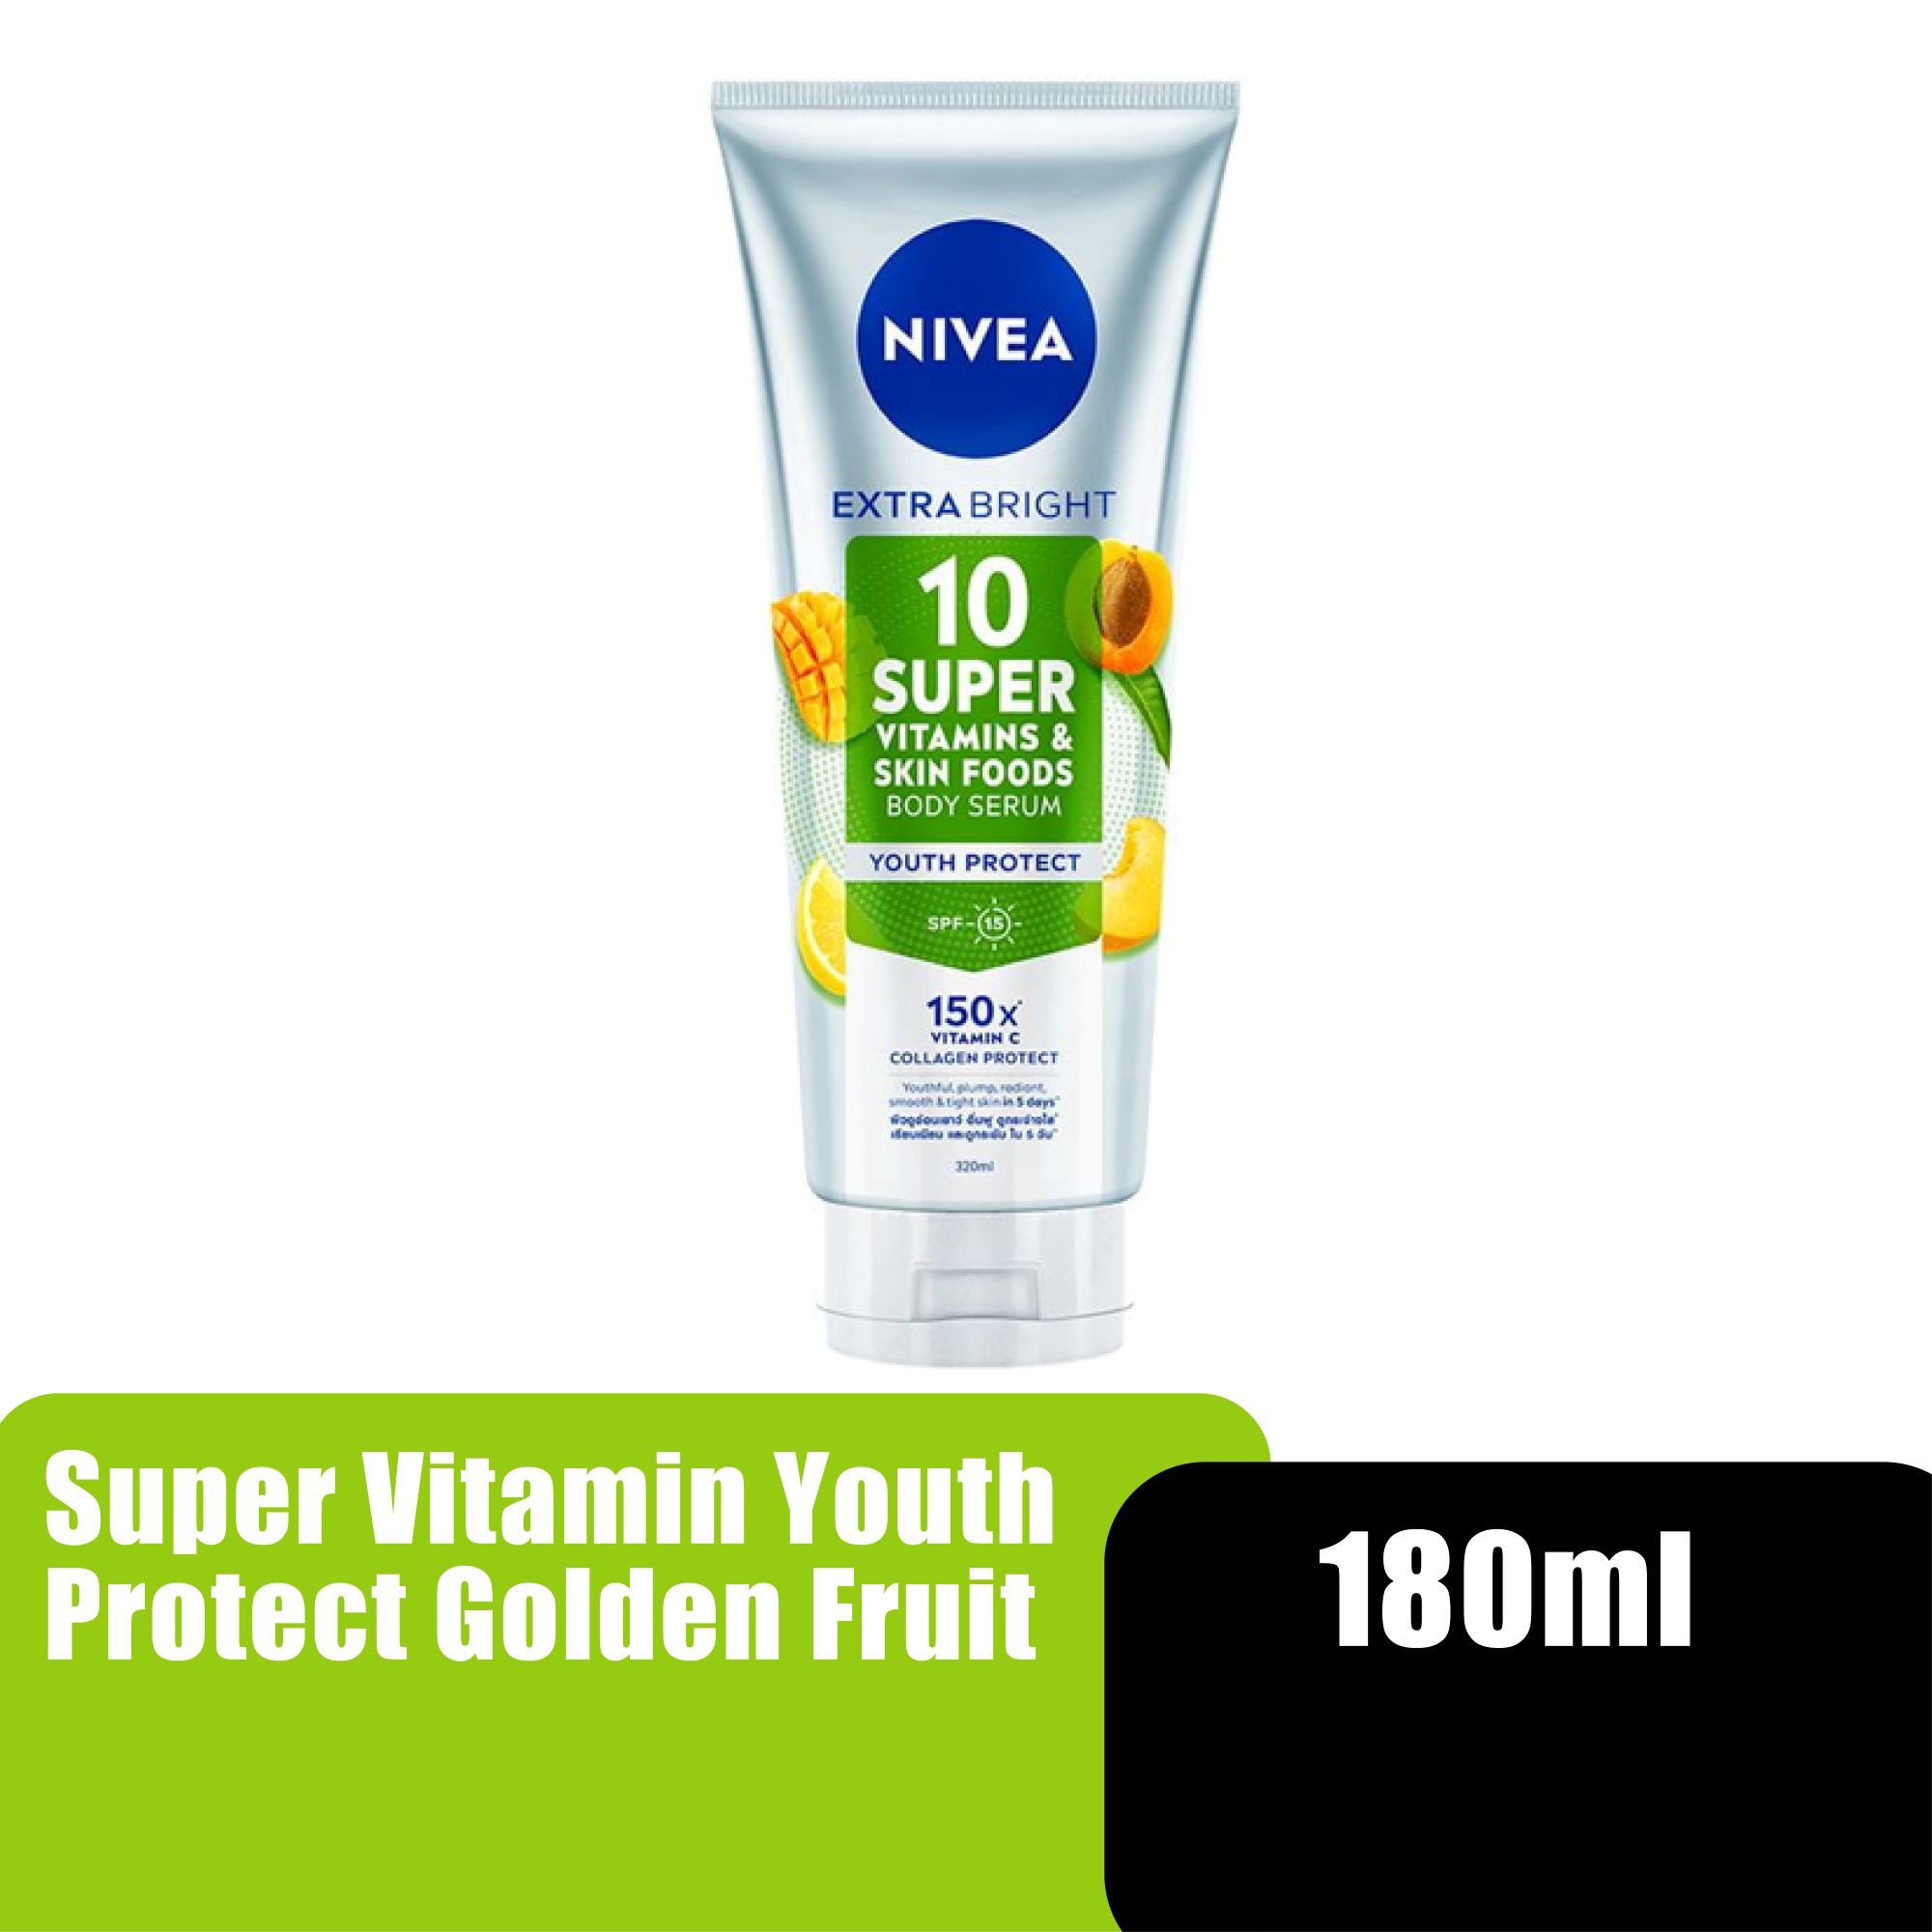 NIVEA EXTRA BRIGHT 10 SUPER VITAMINS & SKIN FOODS YOUTH PROTECT SERUM 180ML (93771)